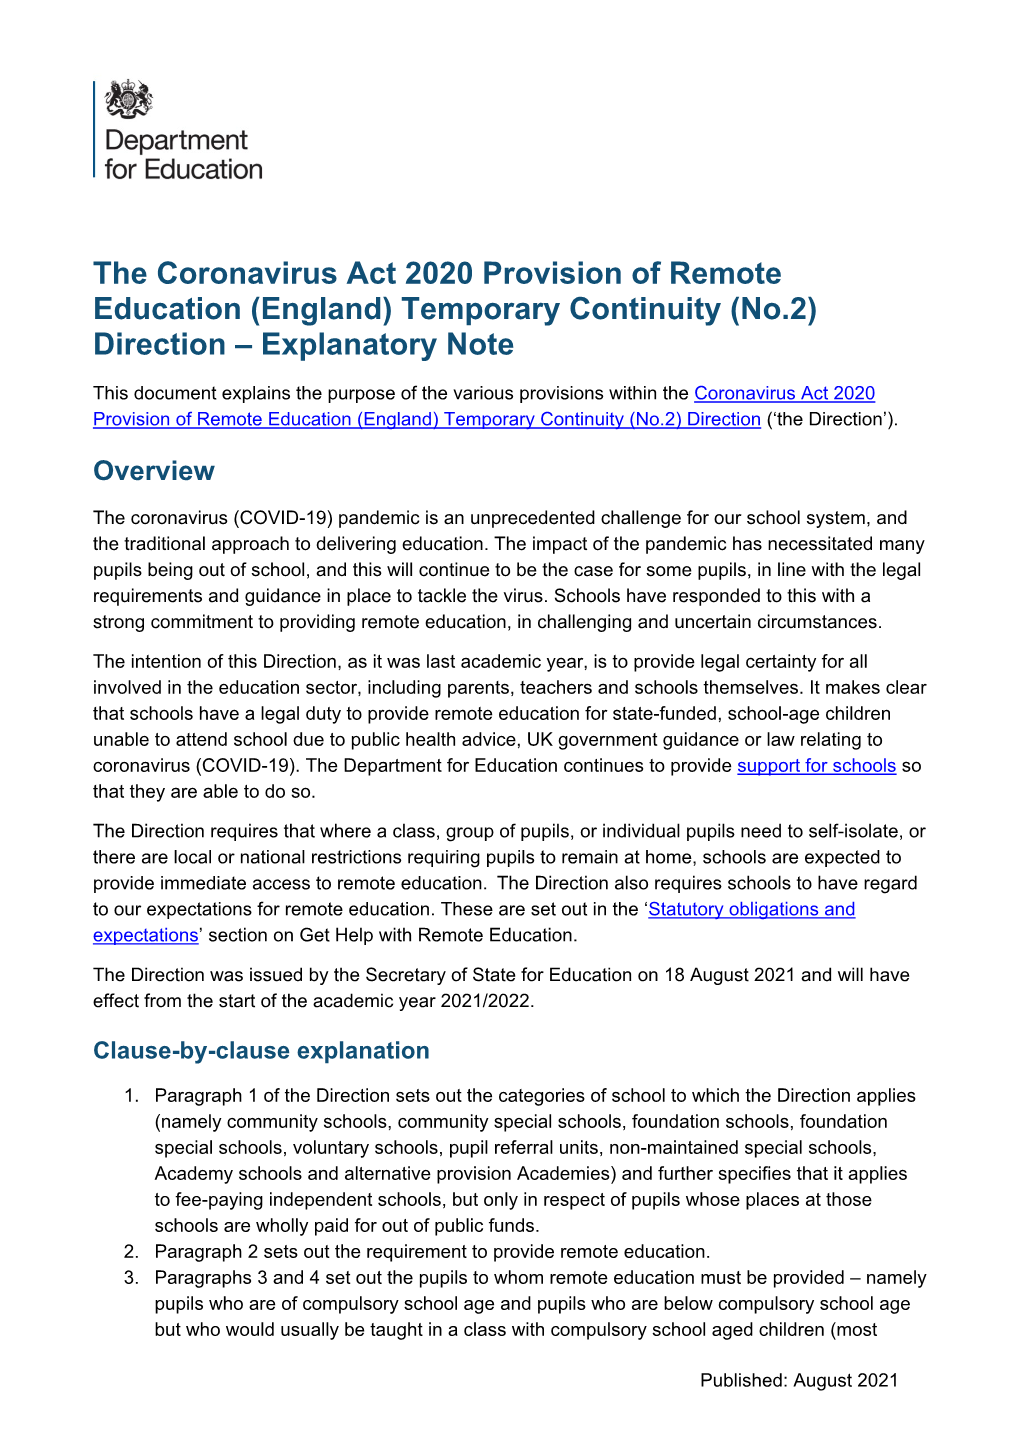 The Coronavirus Act 2020 Provision of Remote Education (England) Temporary Continuity (No.2) Direction – Explanatory Note